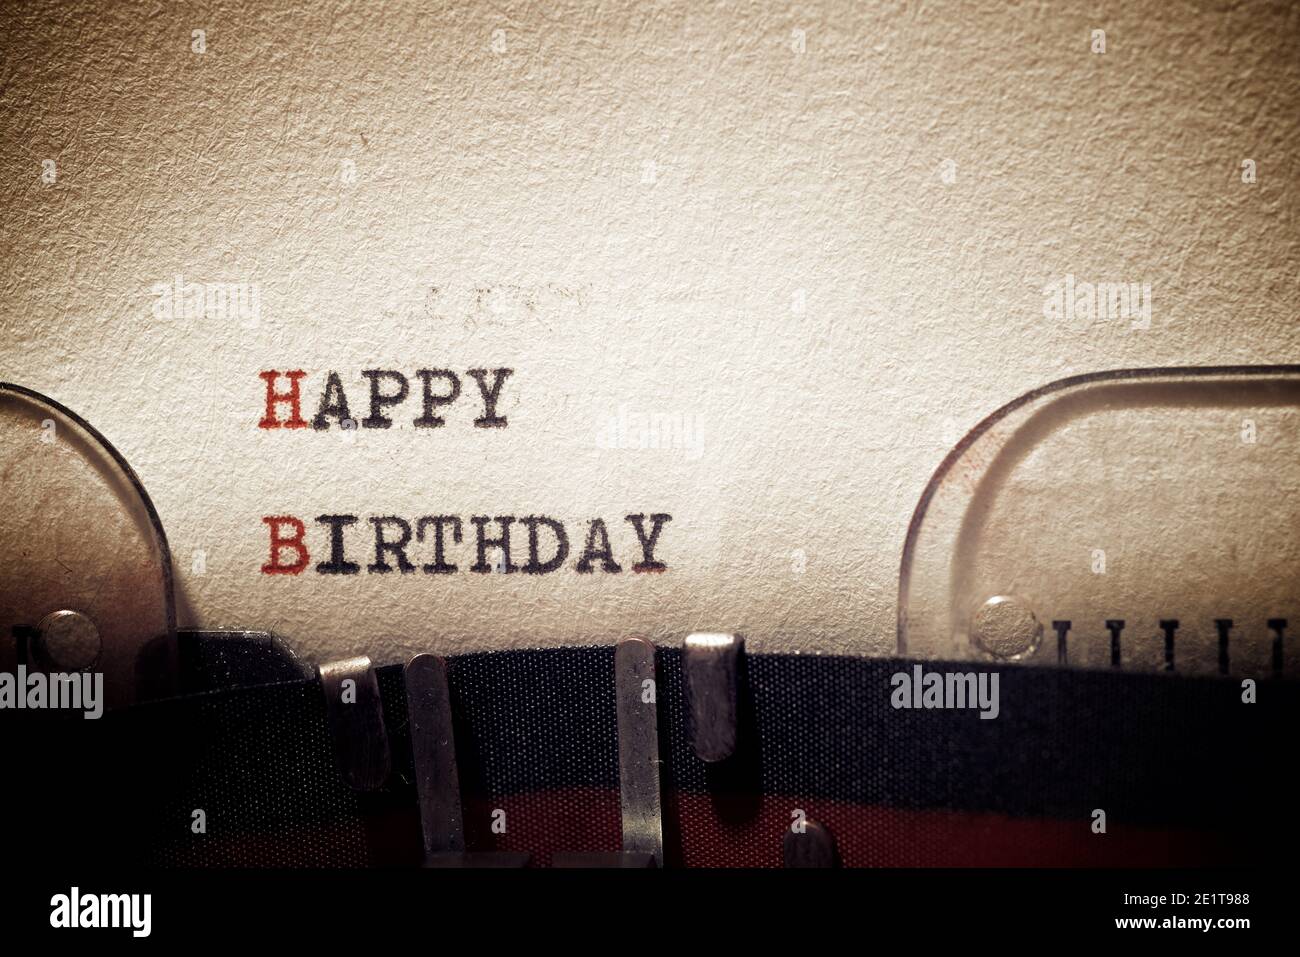 Happy birthday phrase written with a typewriter Stock Photo - Alamy